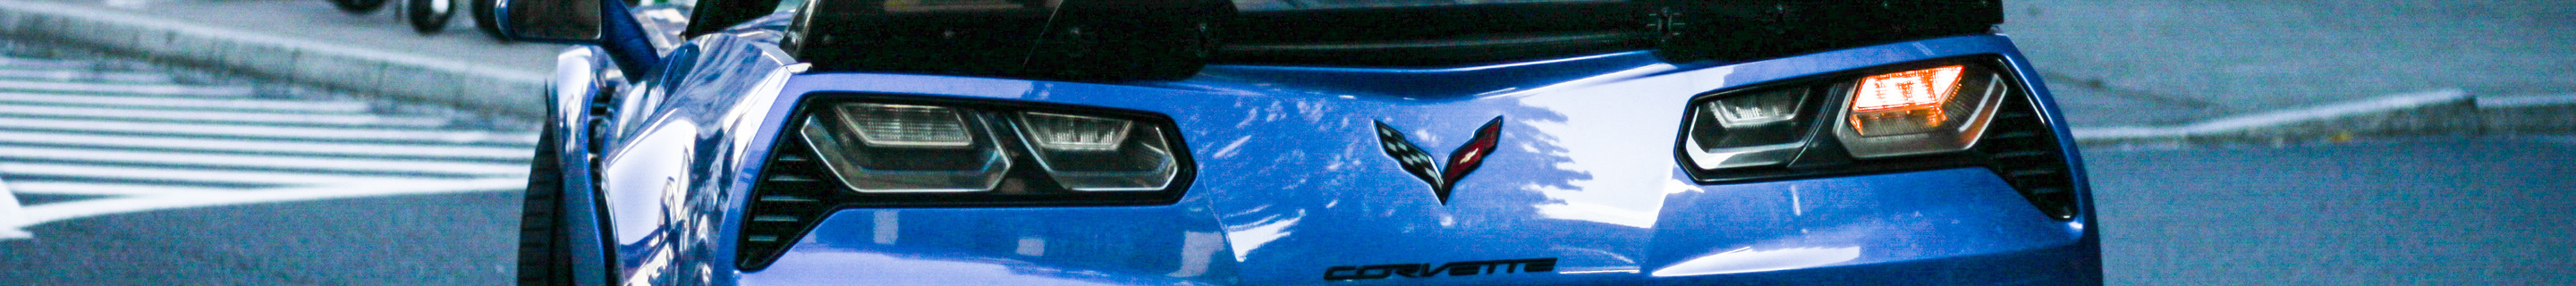 Chevrolet Corvette C7 Z06 Convertible